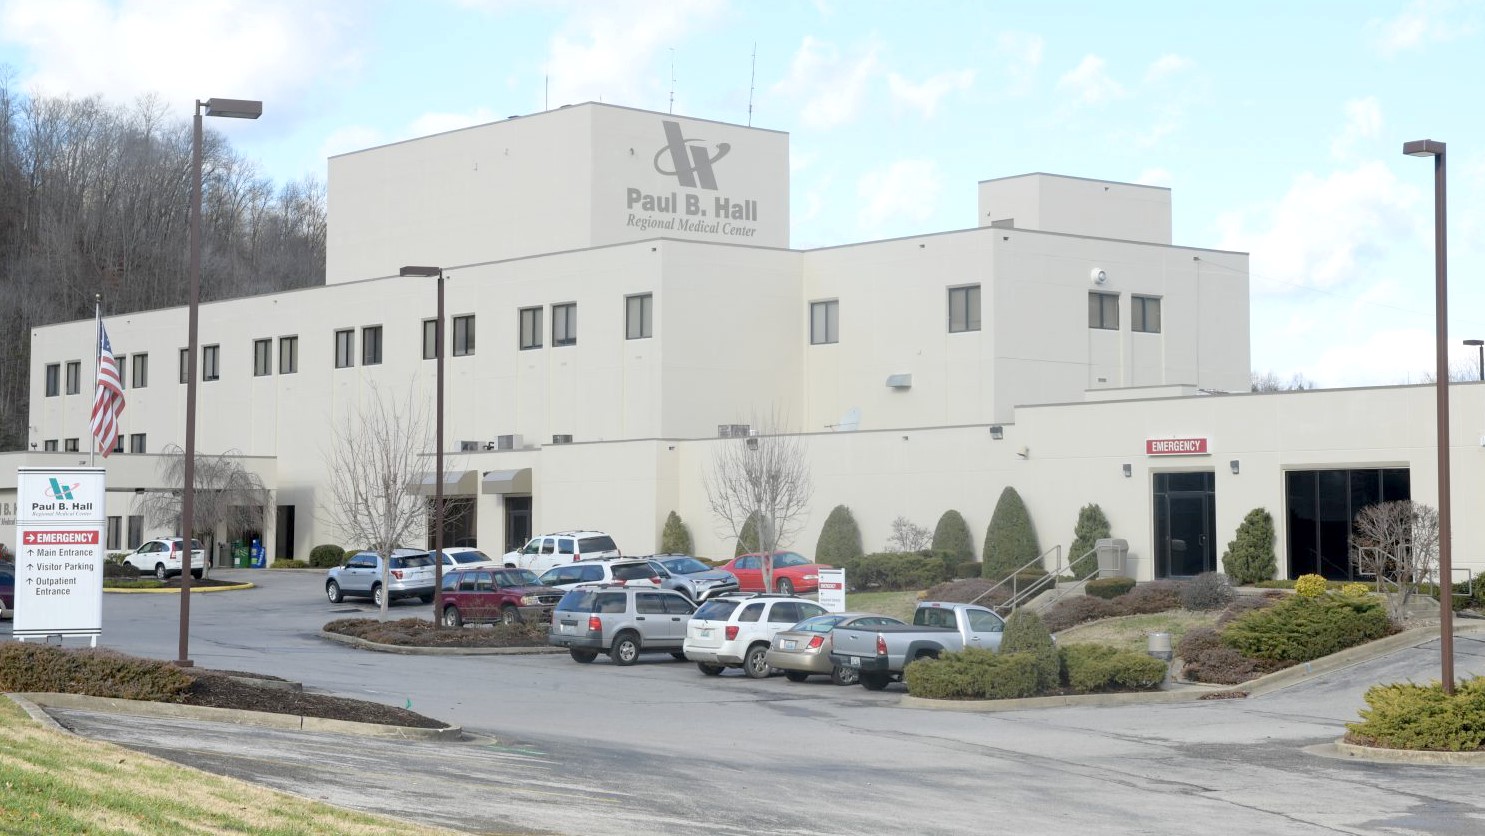 ARH takes over Paintsville hospital